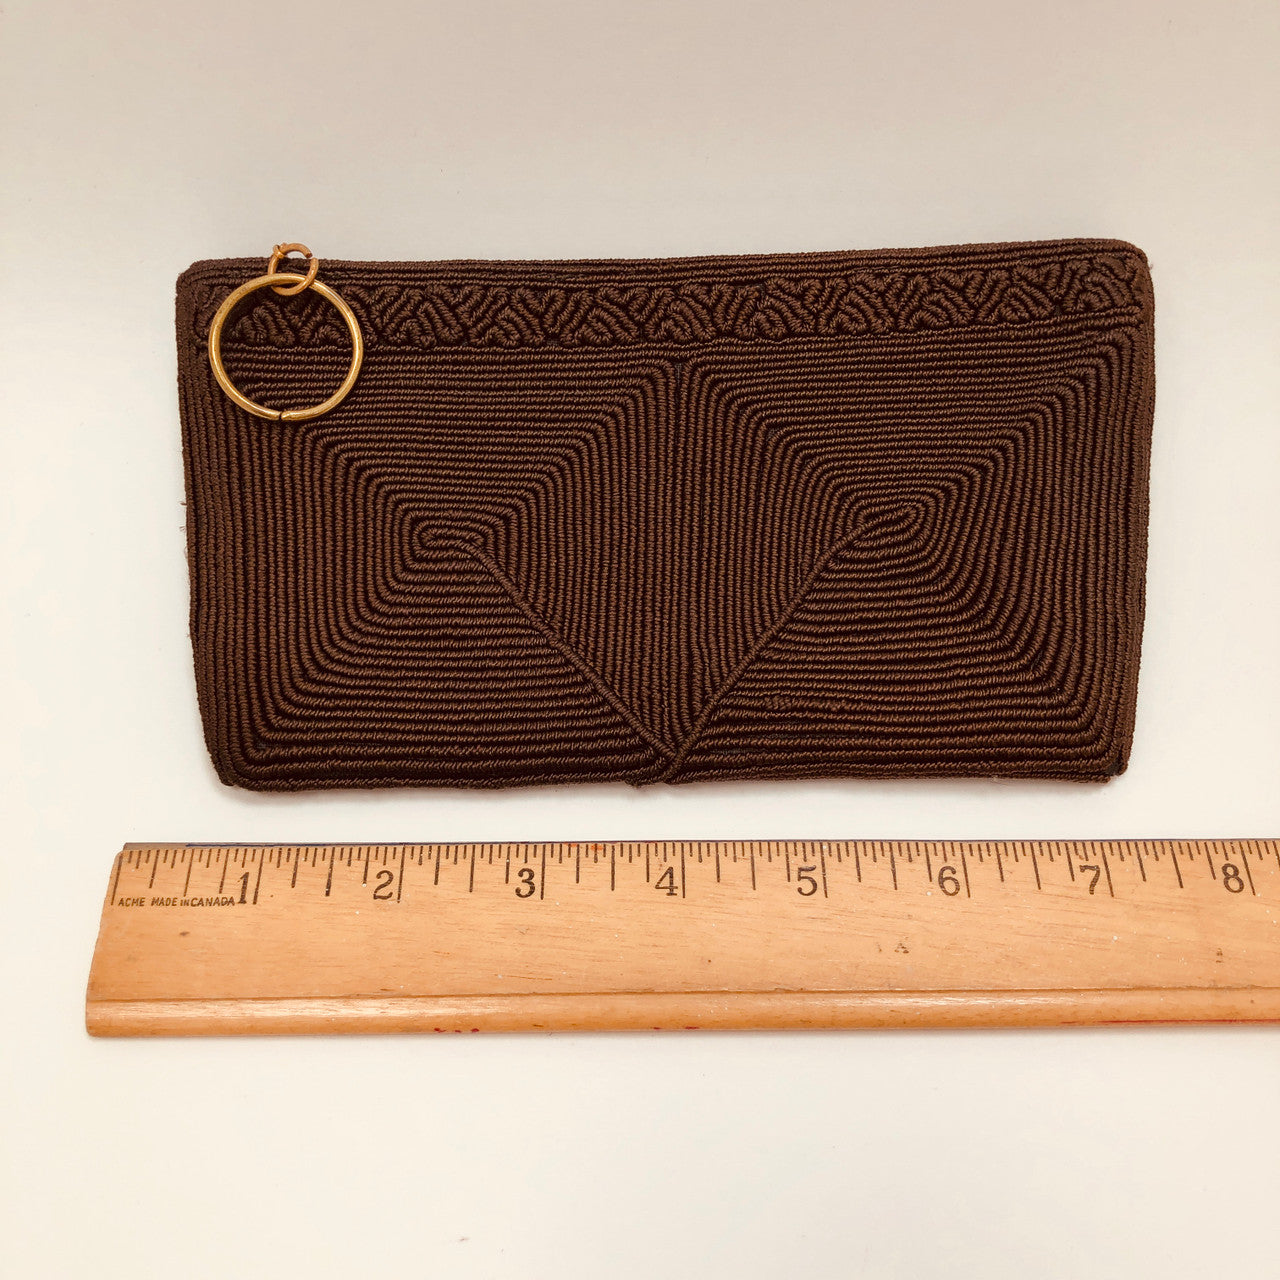 Corde, Brown, Clutch, Hand Bag, Purse, Handbag, Vintage, Brass Zipper